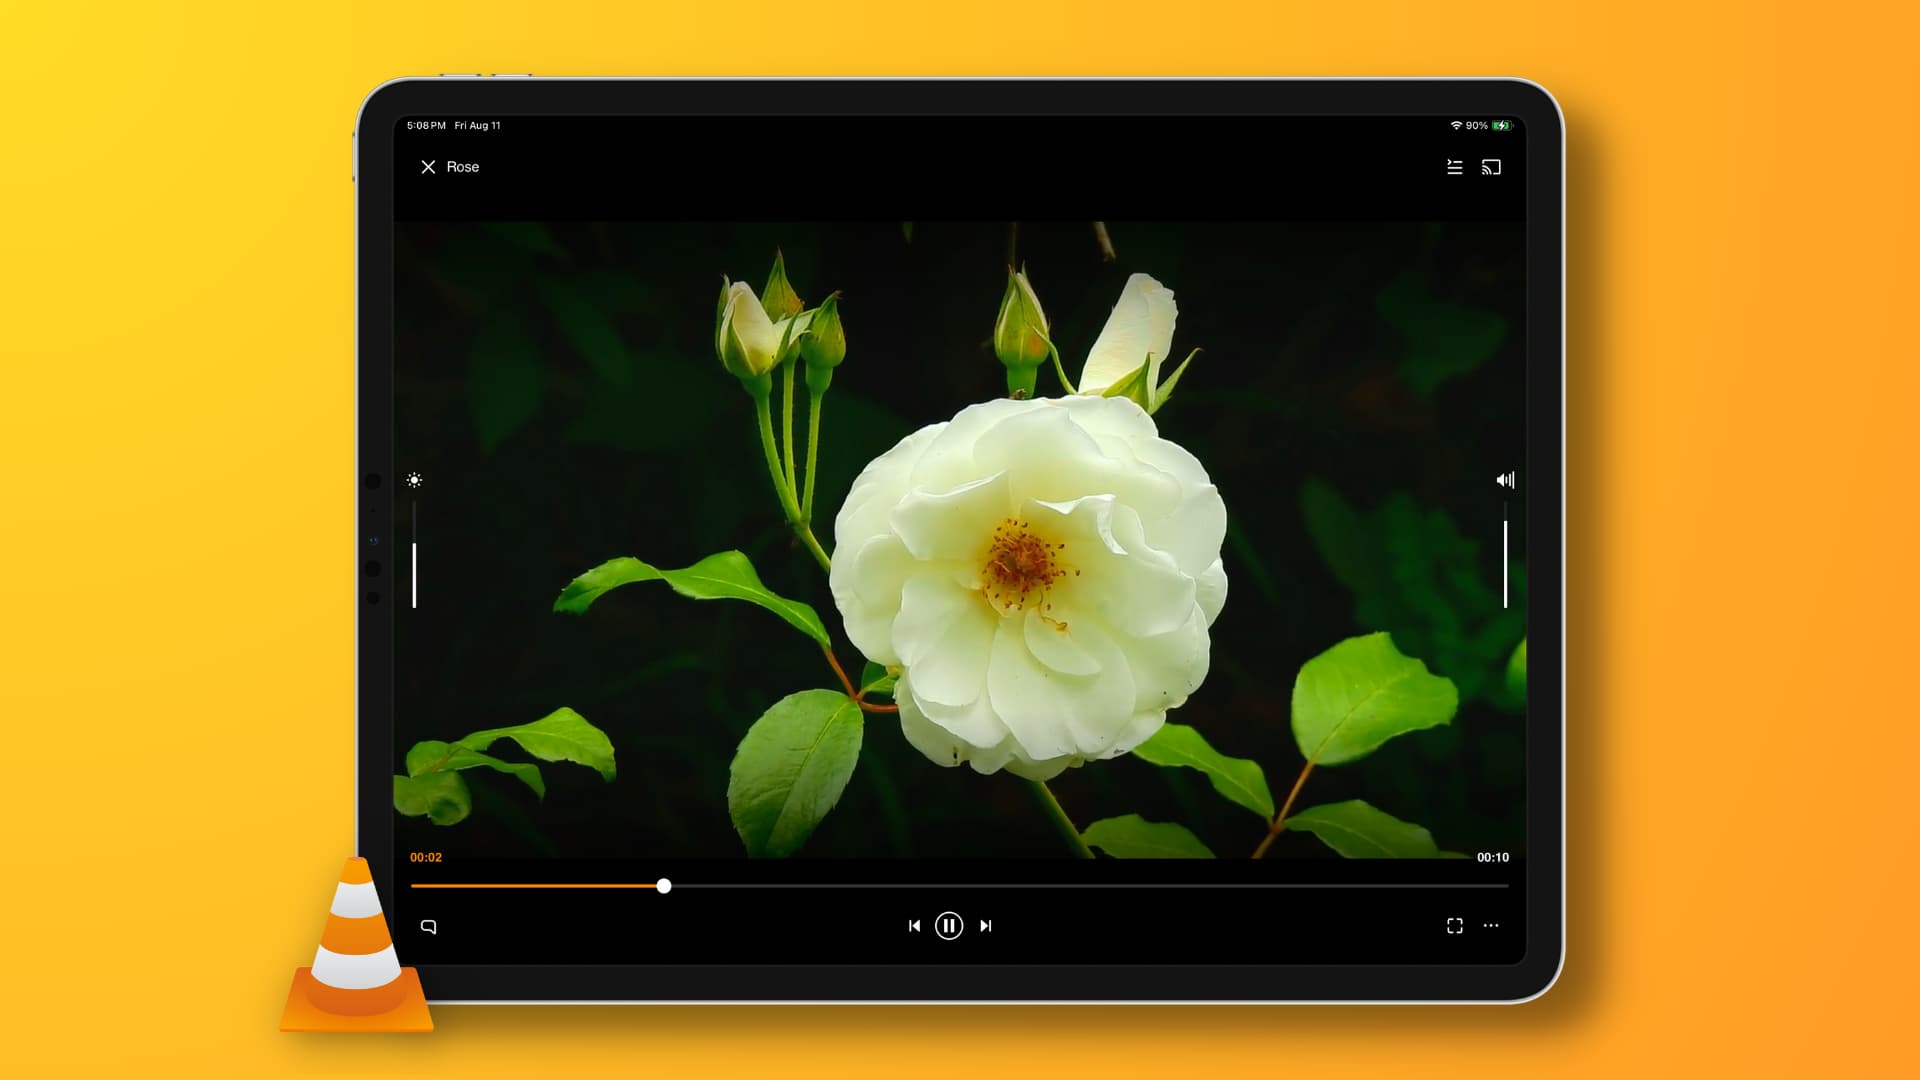 VLC Media Player on iPad